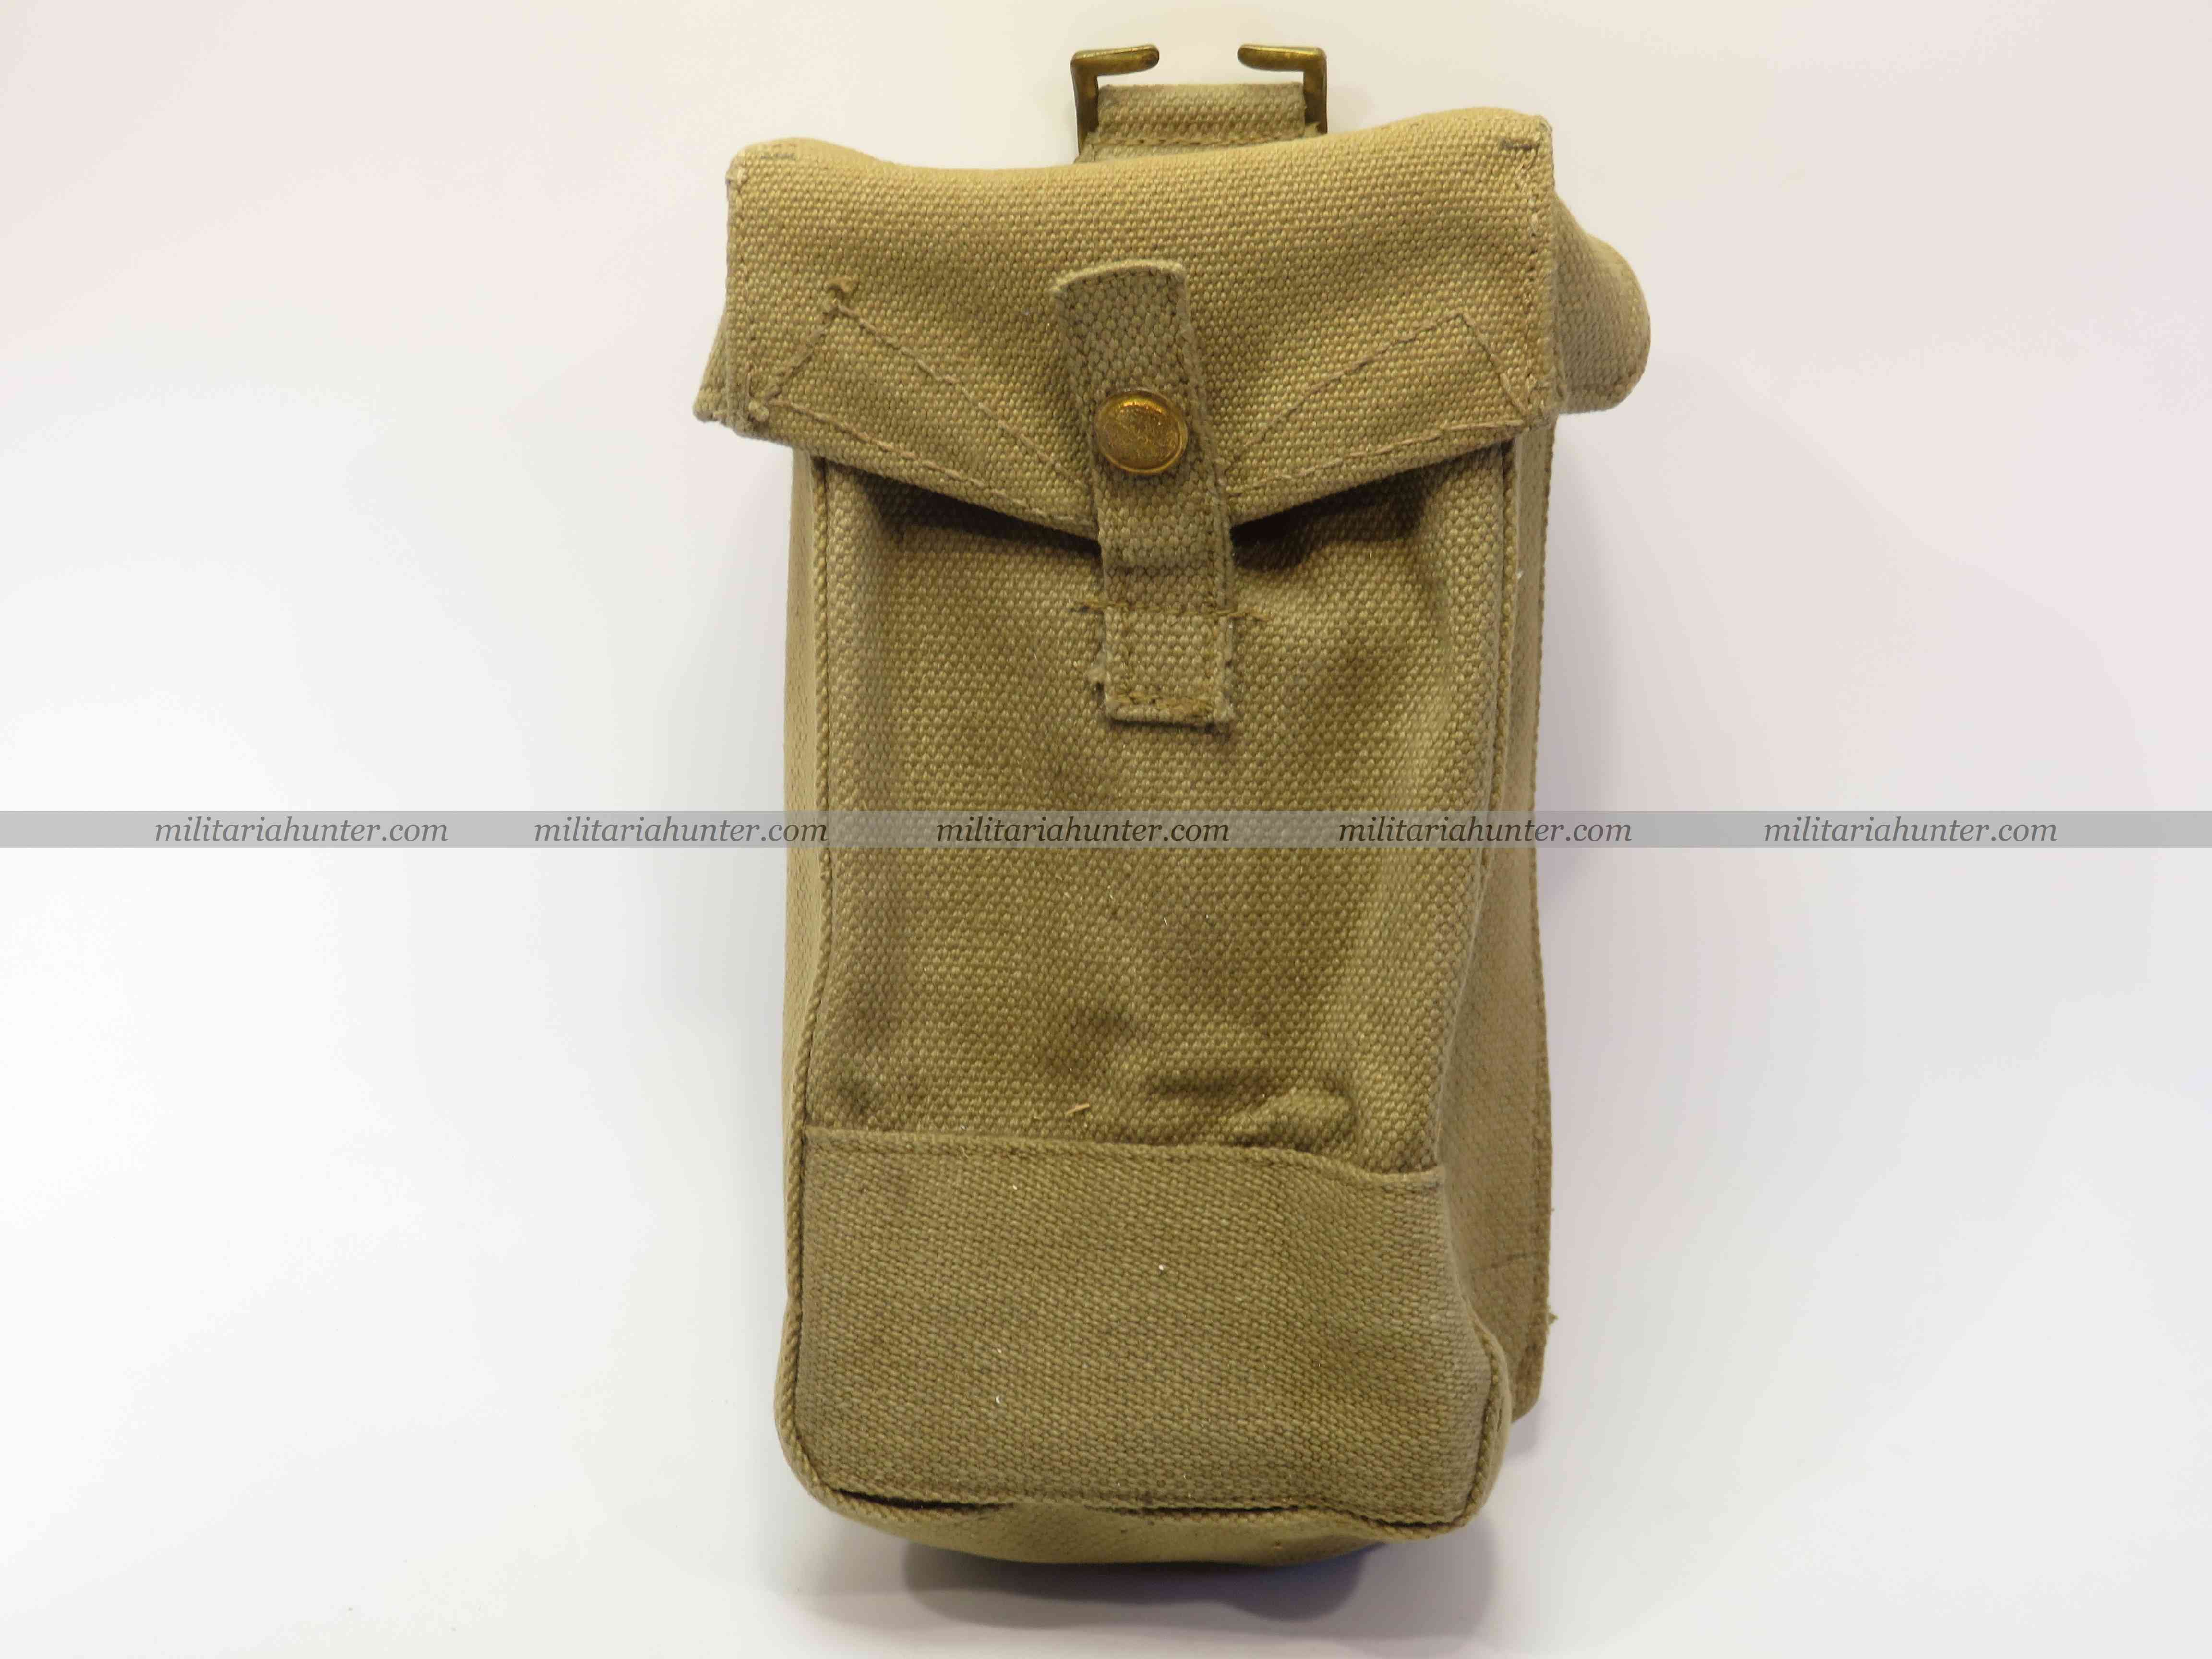 militaria : WW2 British utility pouch pattern 37 - pouch additionnel daté 1941